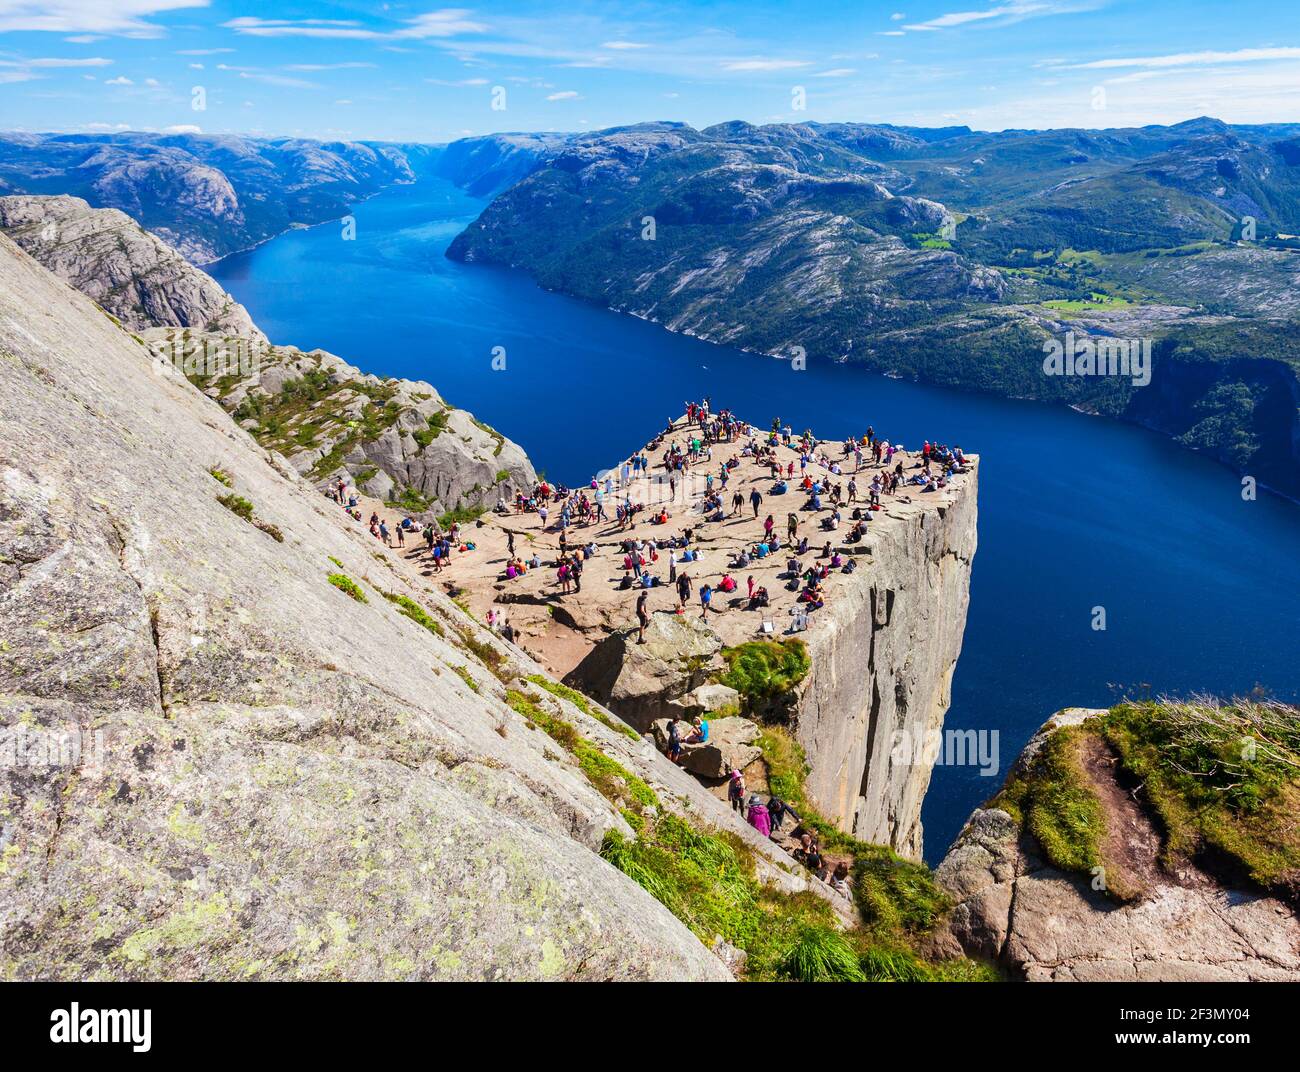 Preikestolen or Prekestolen or Pulpit Rock is a famous tourist attraction near Stavanger, Norway. Preikestolen is a steep cliff which rises above the Stock Photo